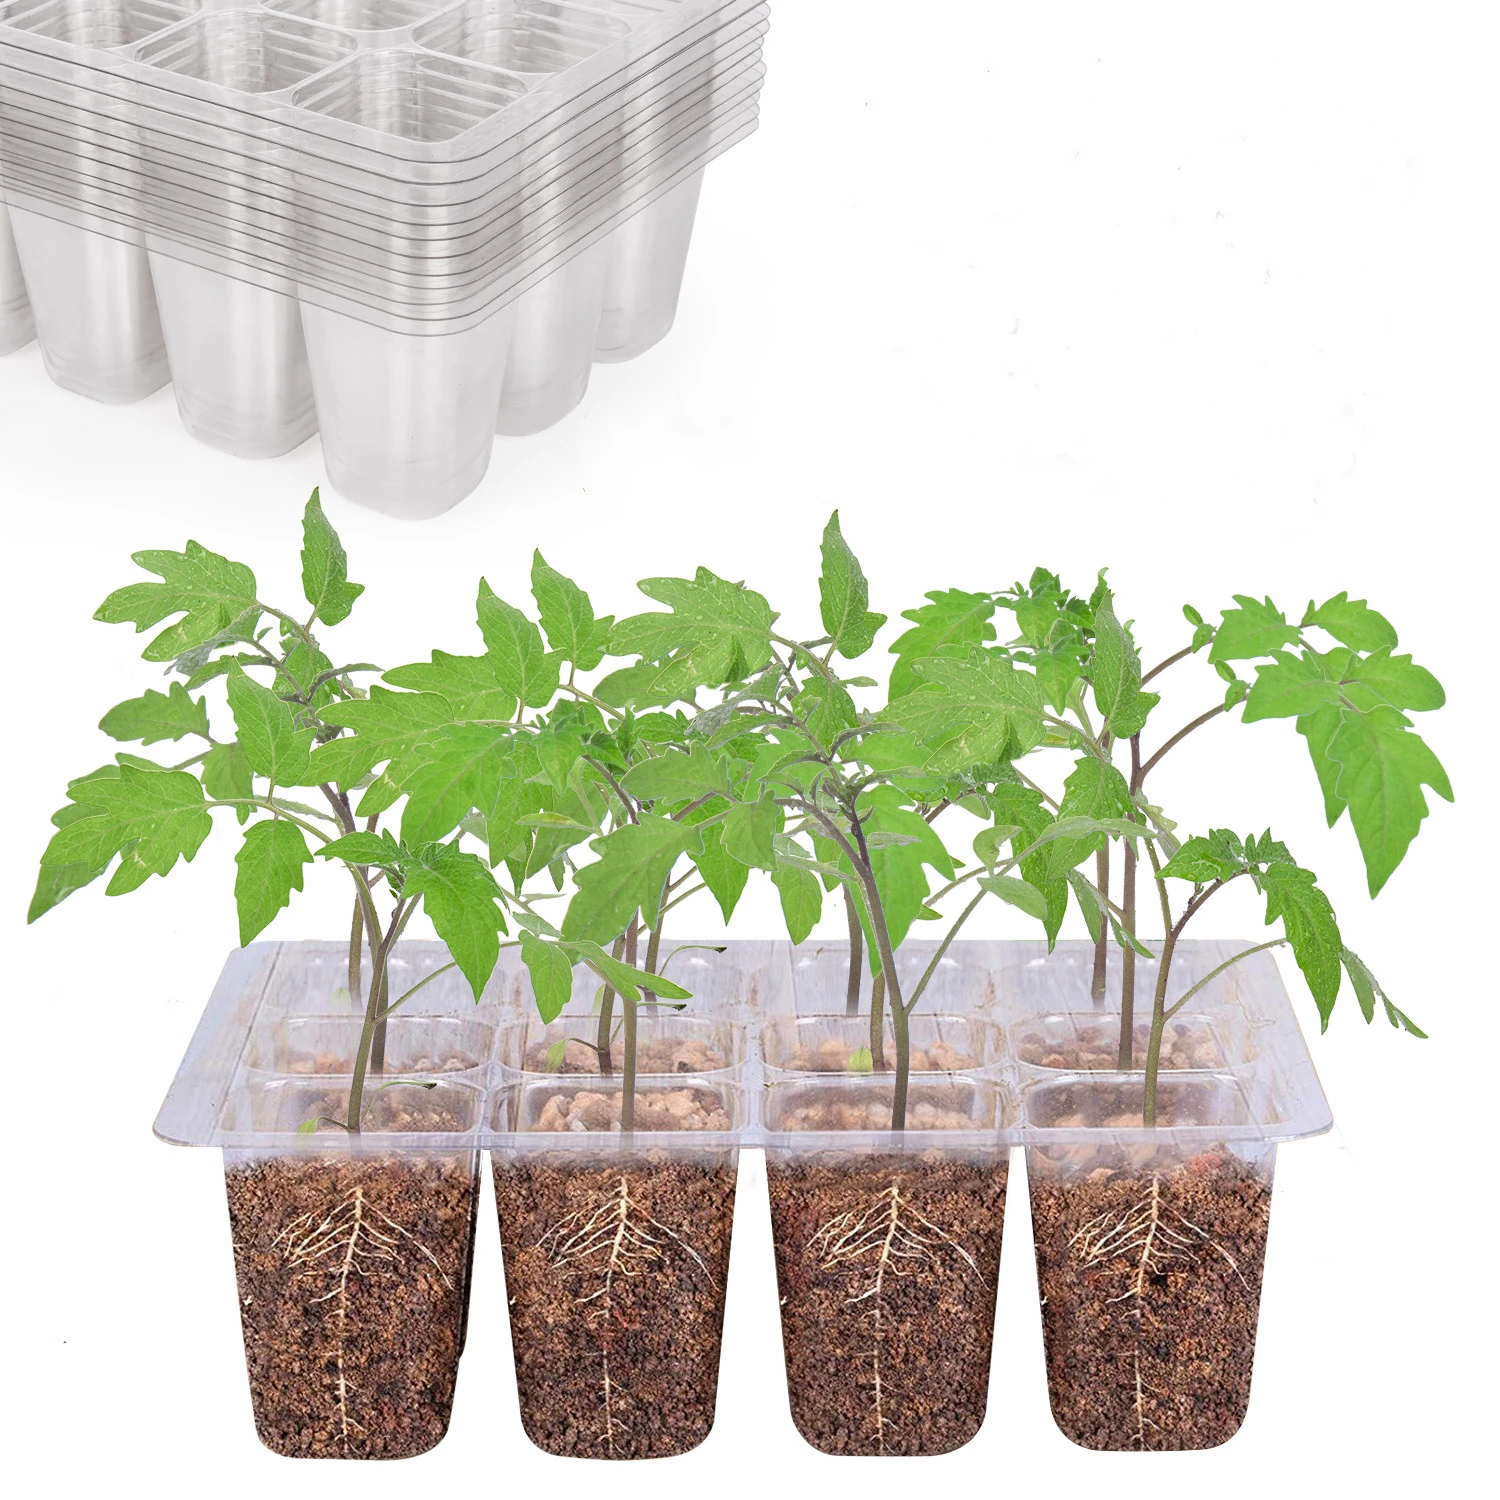 12 Cells Plastic Seed Tray Germination Vegetable Nursery Plant Greenhouse Seedling Trays